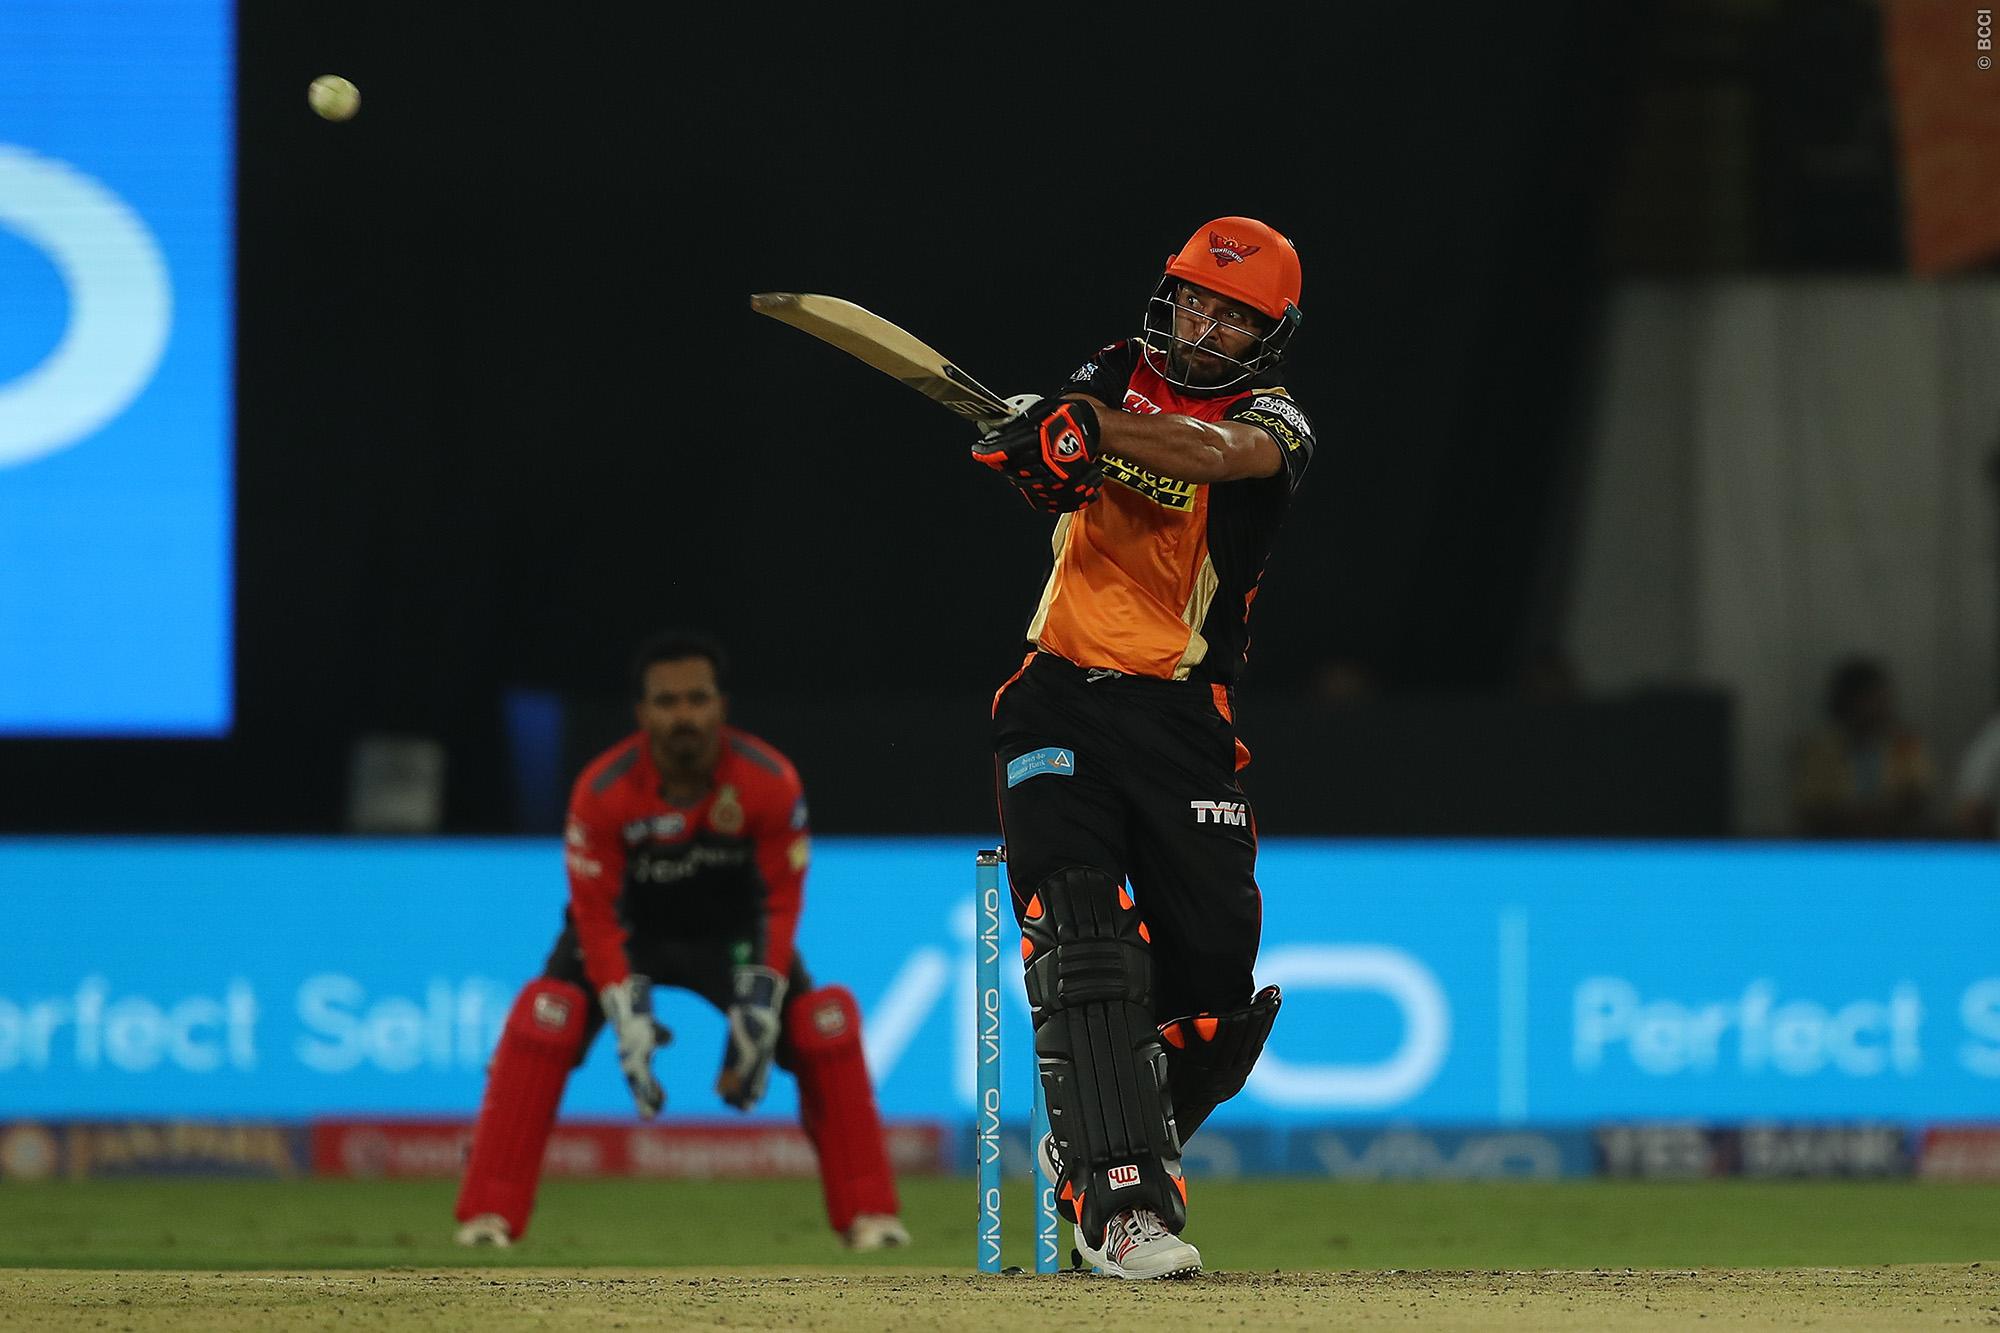 Yuvraj Singh Starts his IPL Season with a Bang